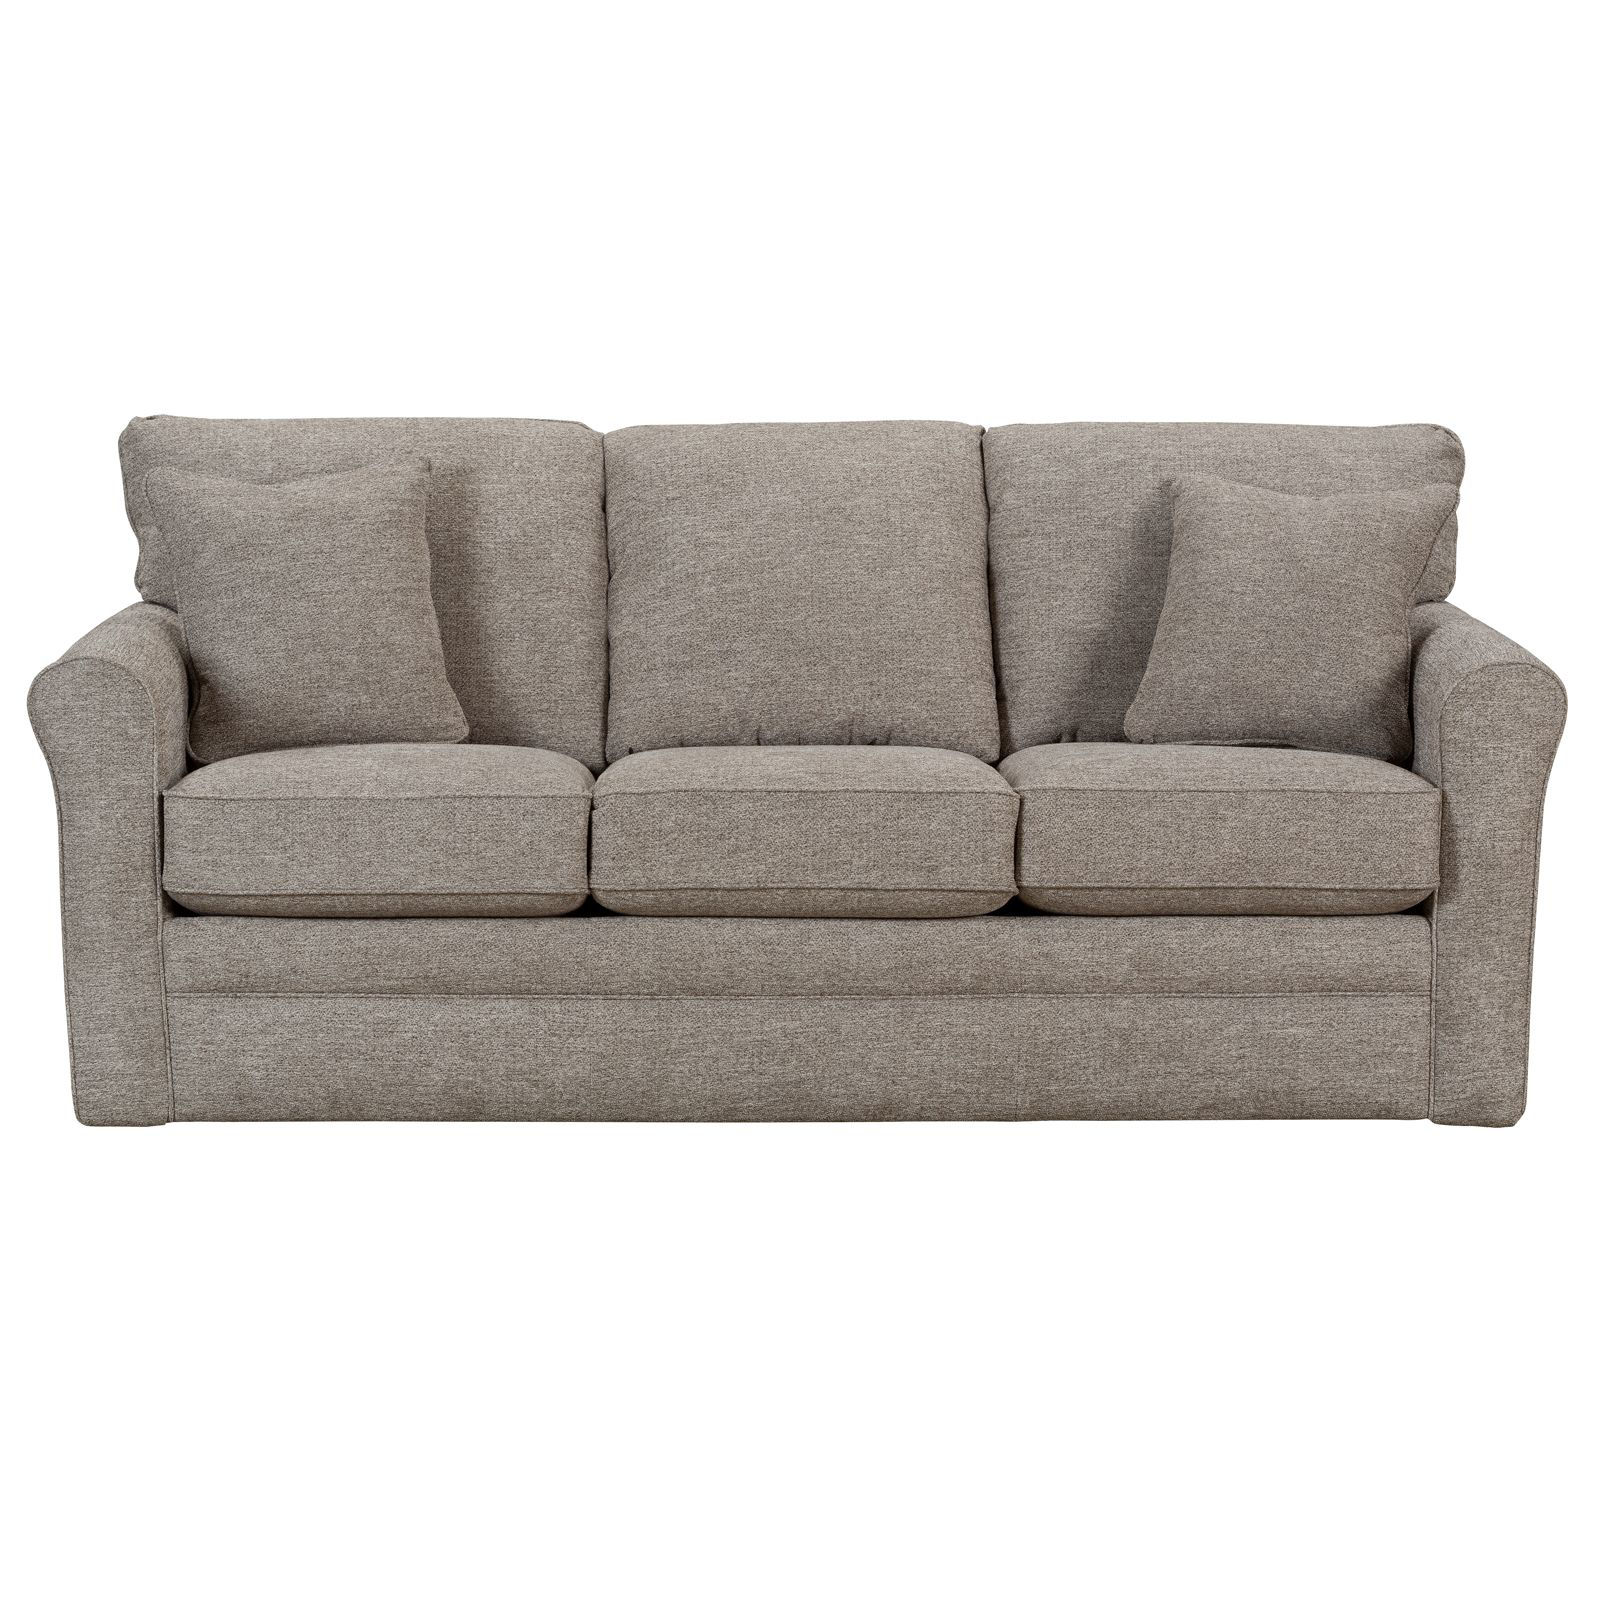 NEW Memory Foam Couch Convertible Sofa, Modern Fabric Futon Sofa